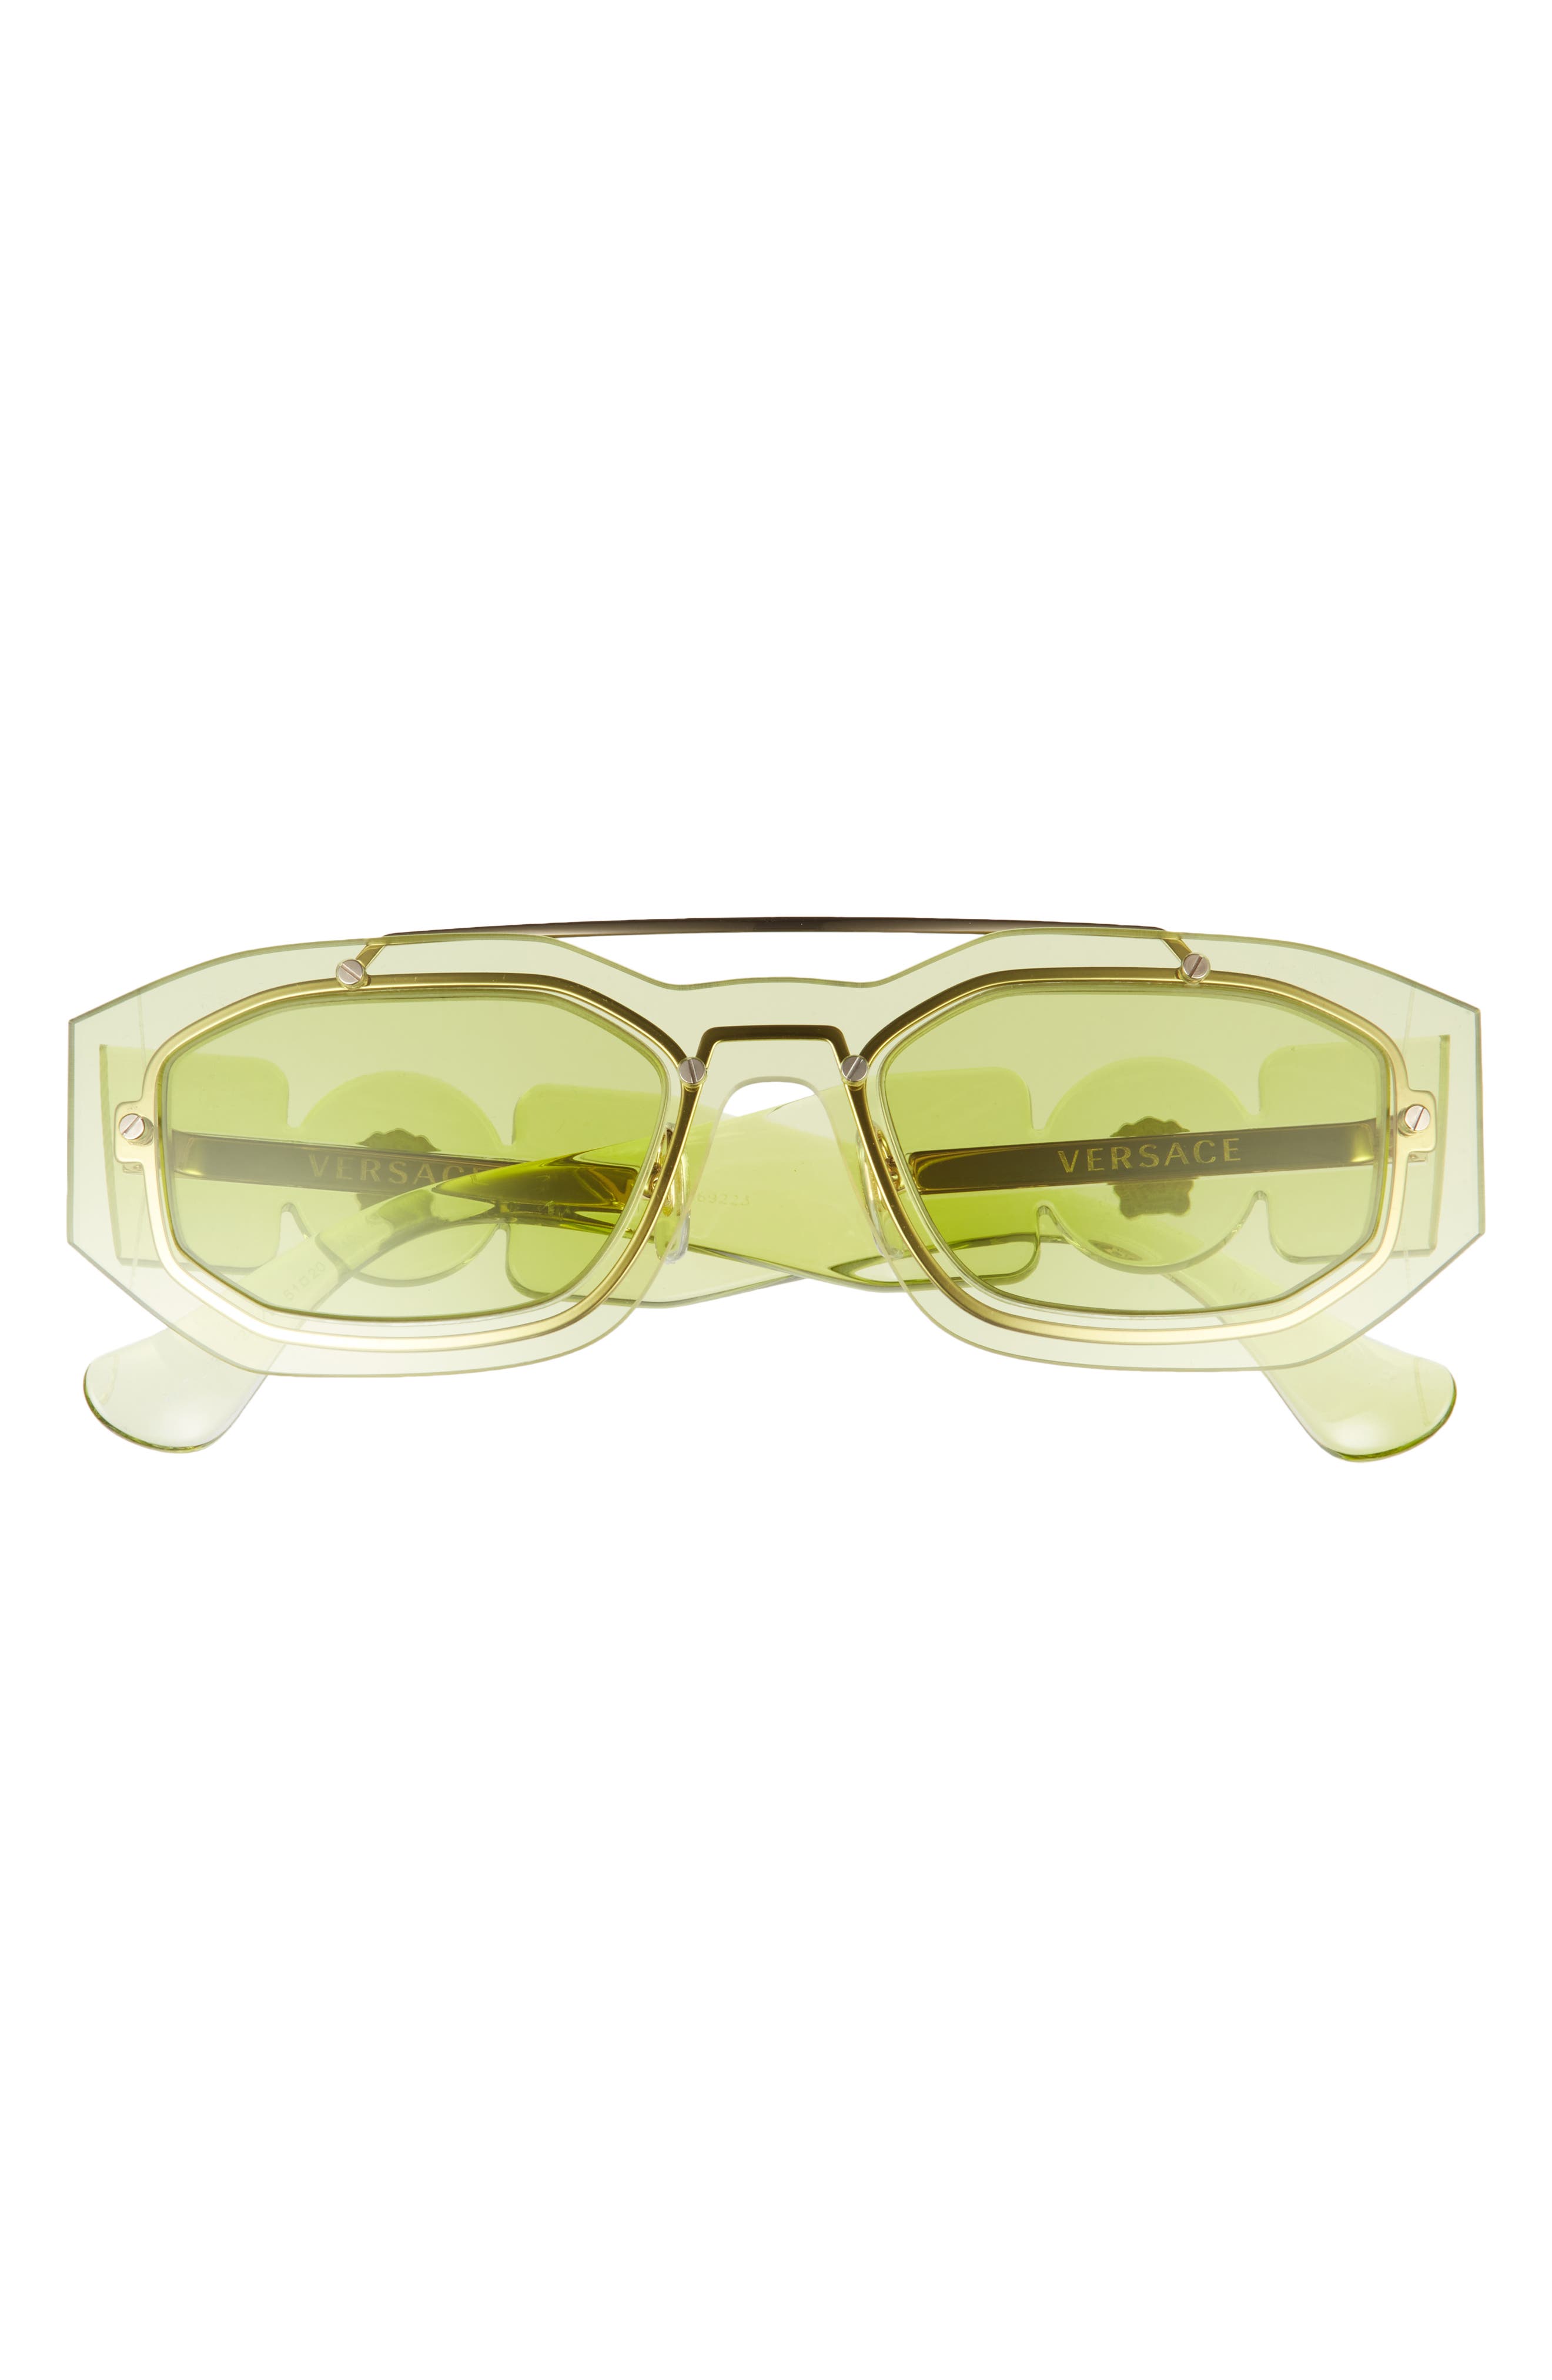 Versace 51mm Irregular Sunglasses in Transparent Light Green/Green at Nordstrom